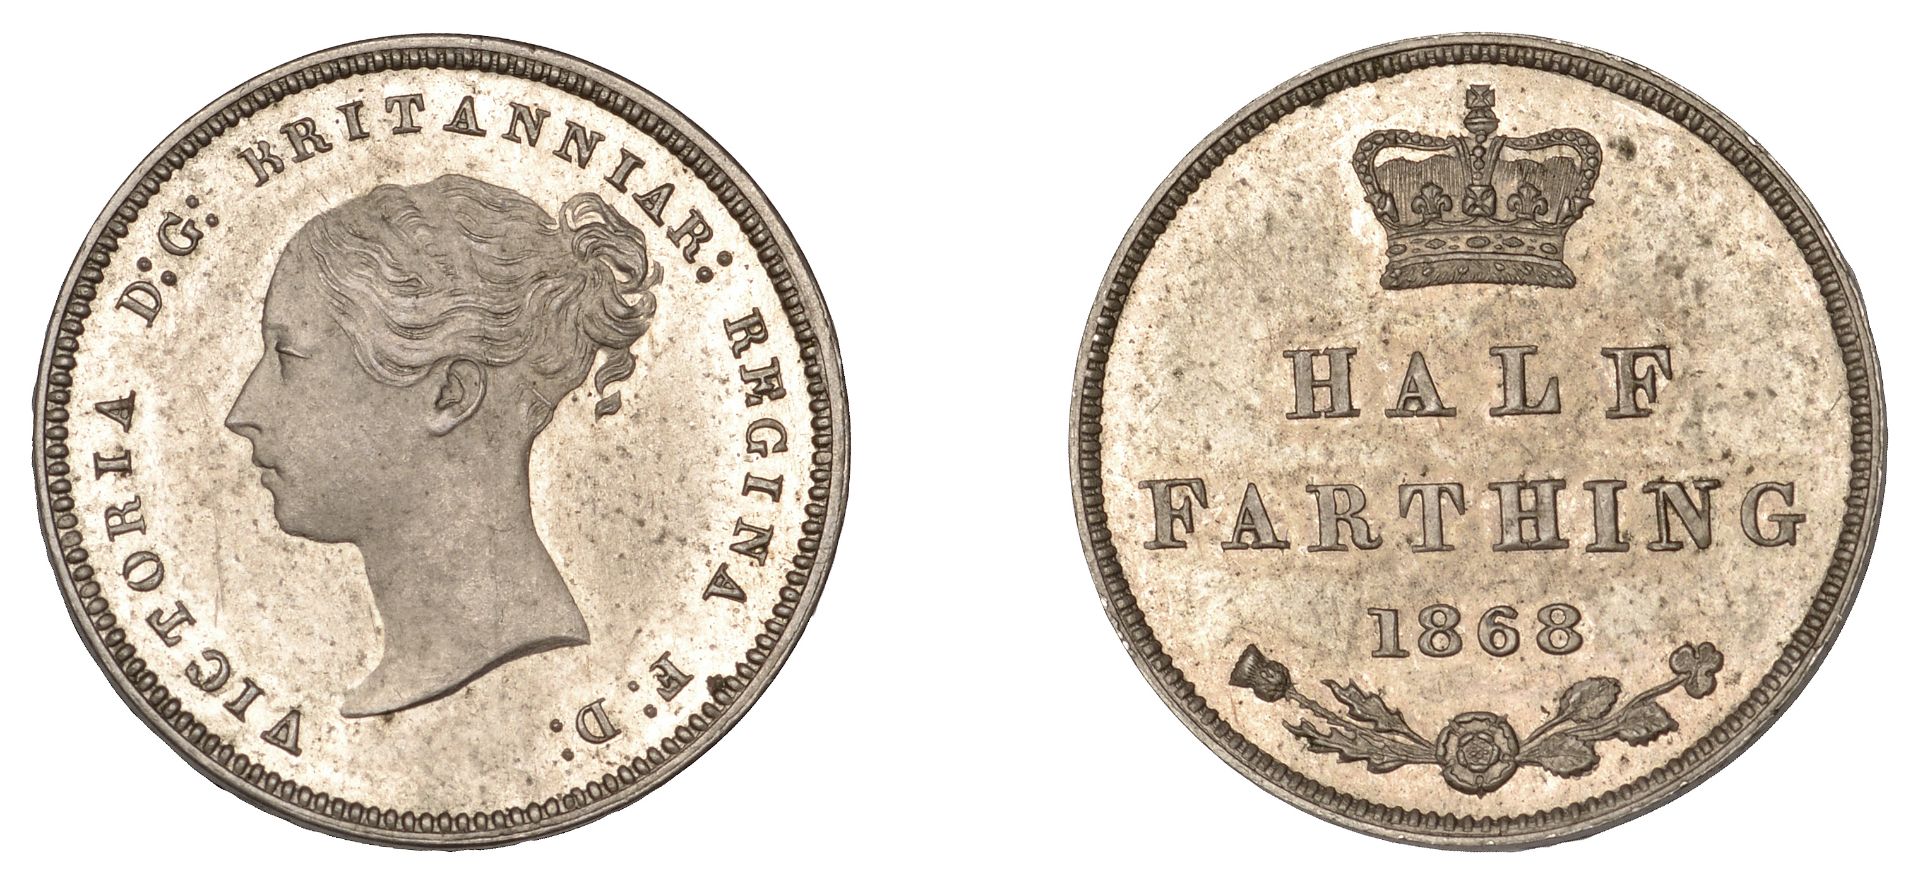 Victoria (1837-1901), Proof or Trial Half-Farthing, 1868, in cupro-nickel, edge plain, 2.31g...